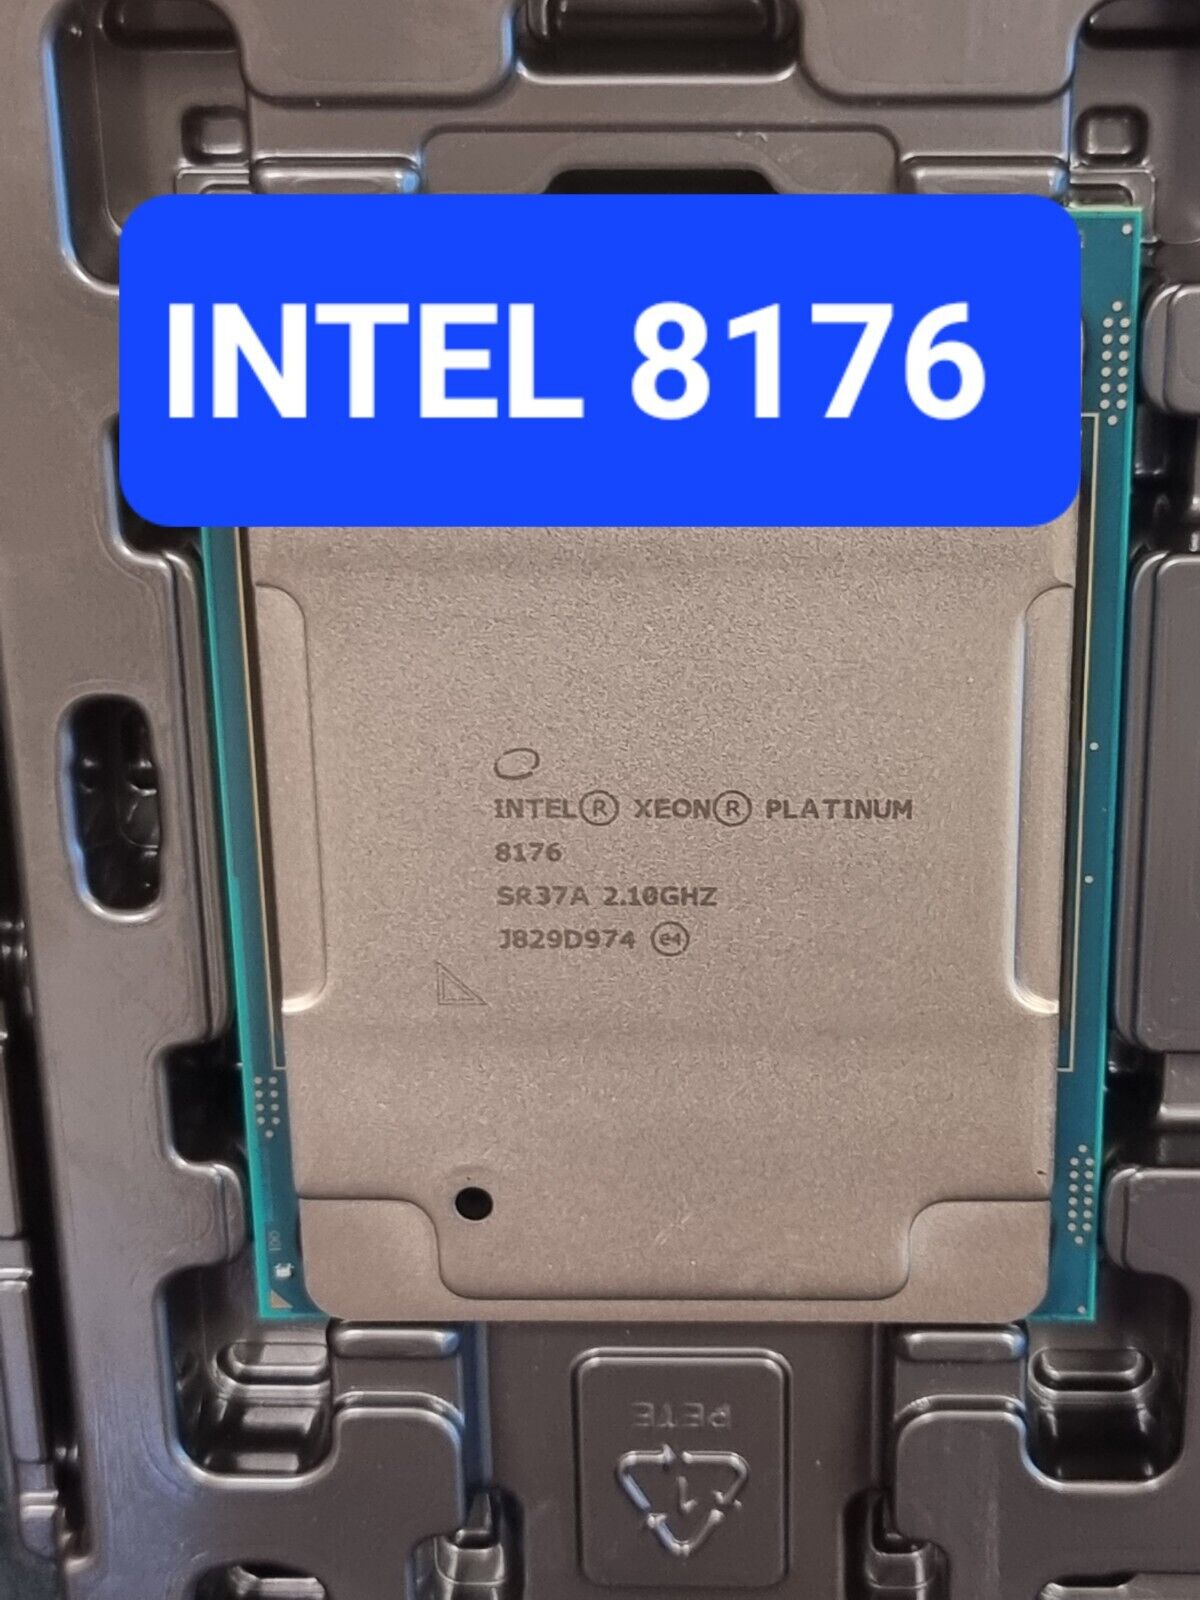 Intel Xeon Platinum 8176 28-core 2.1GHz Sr37a Processor